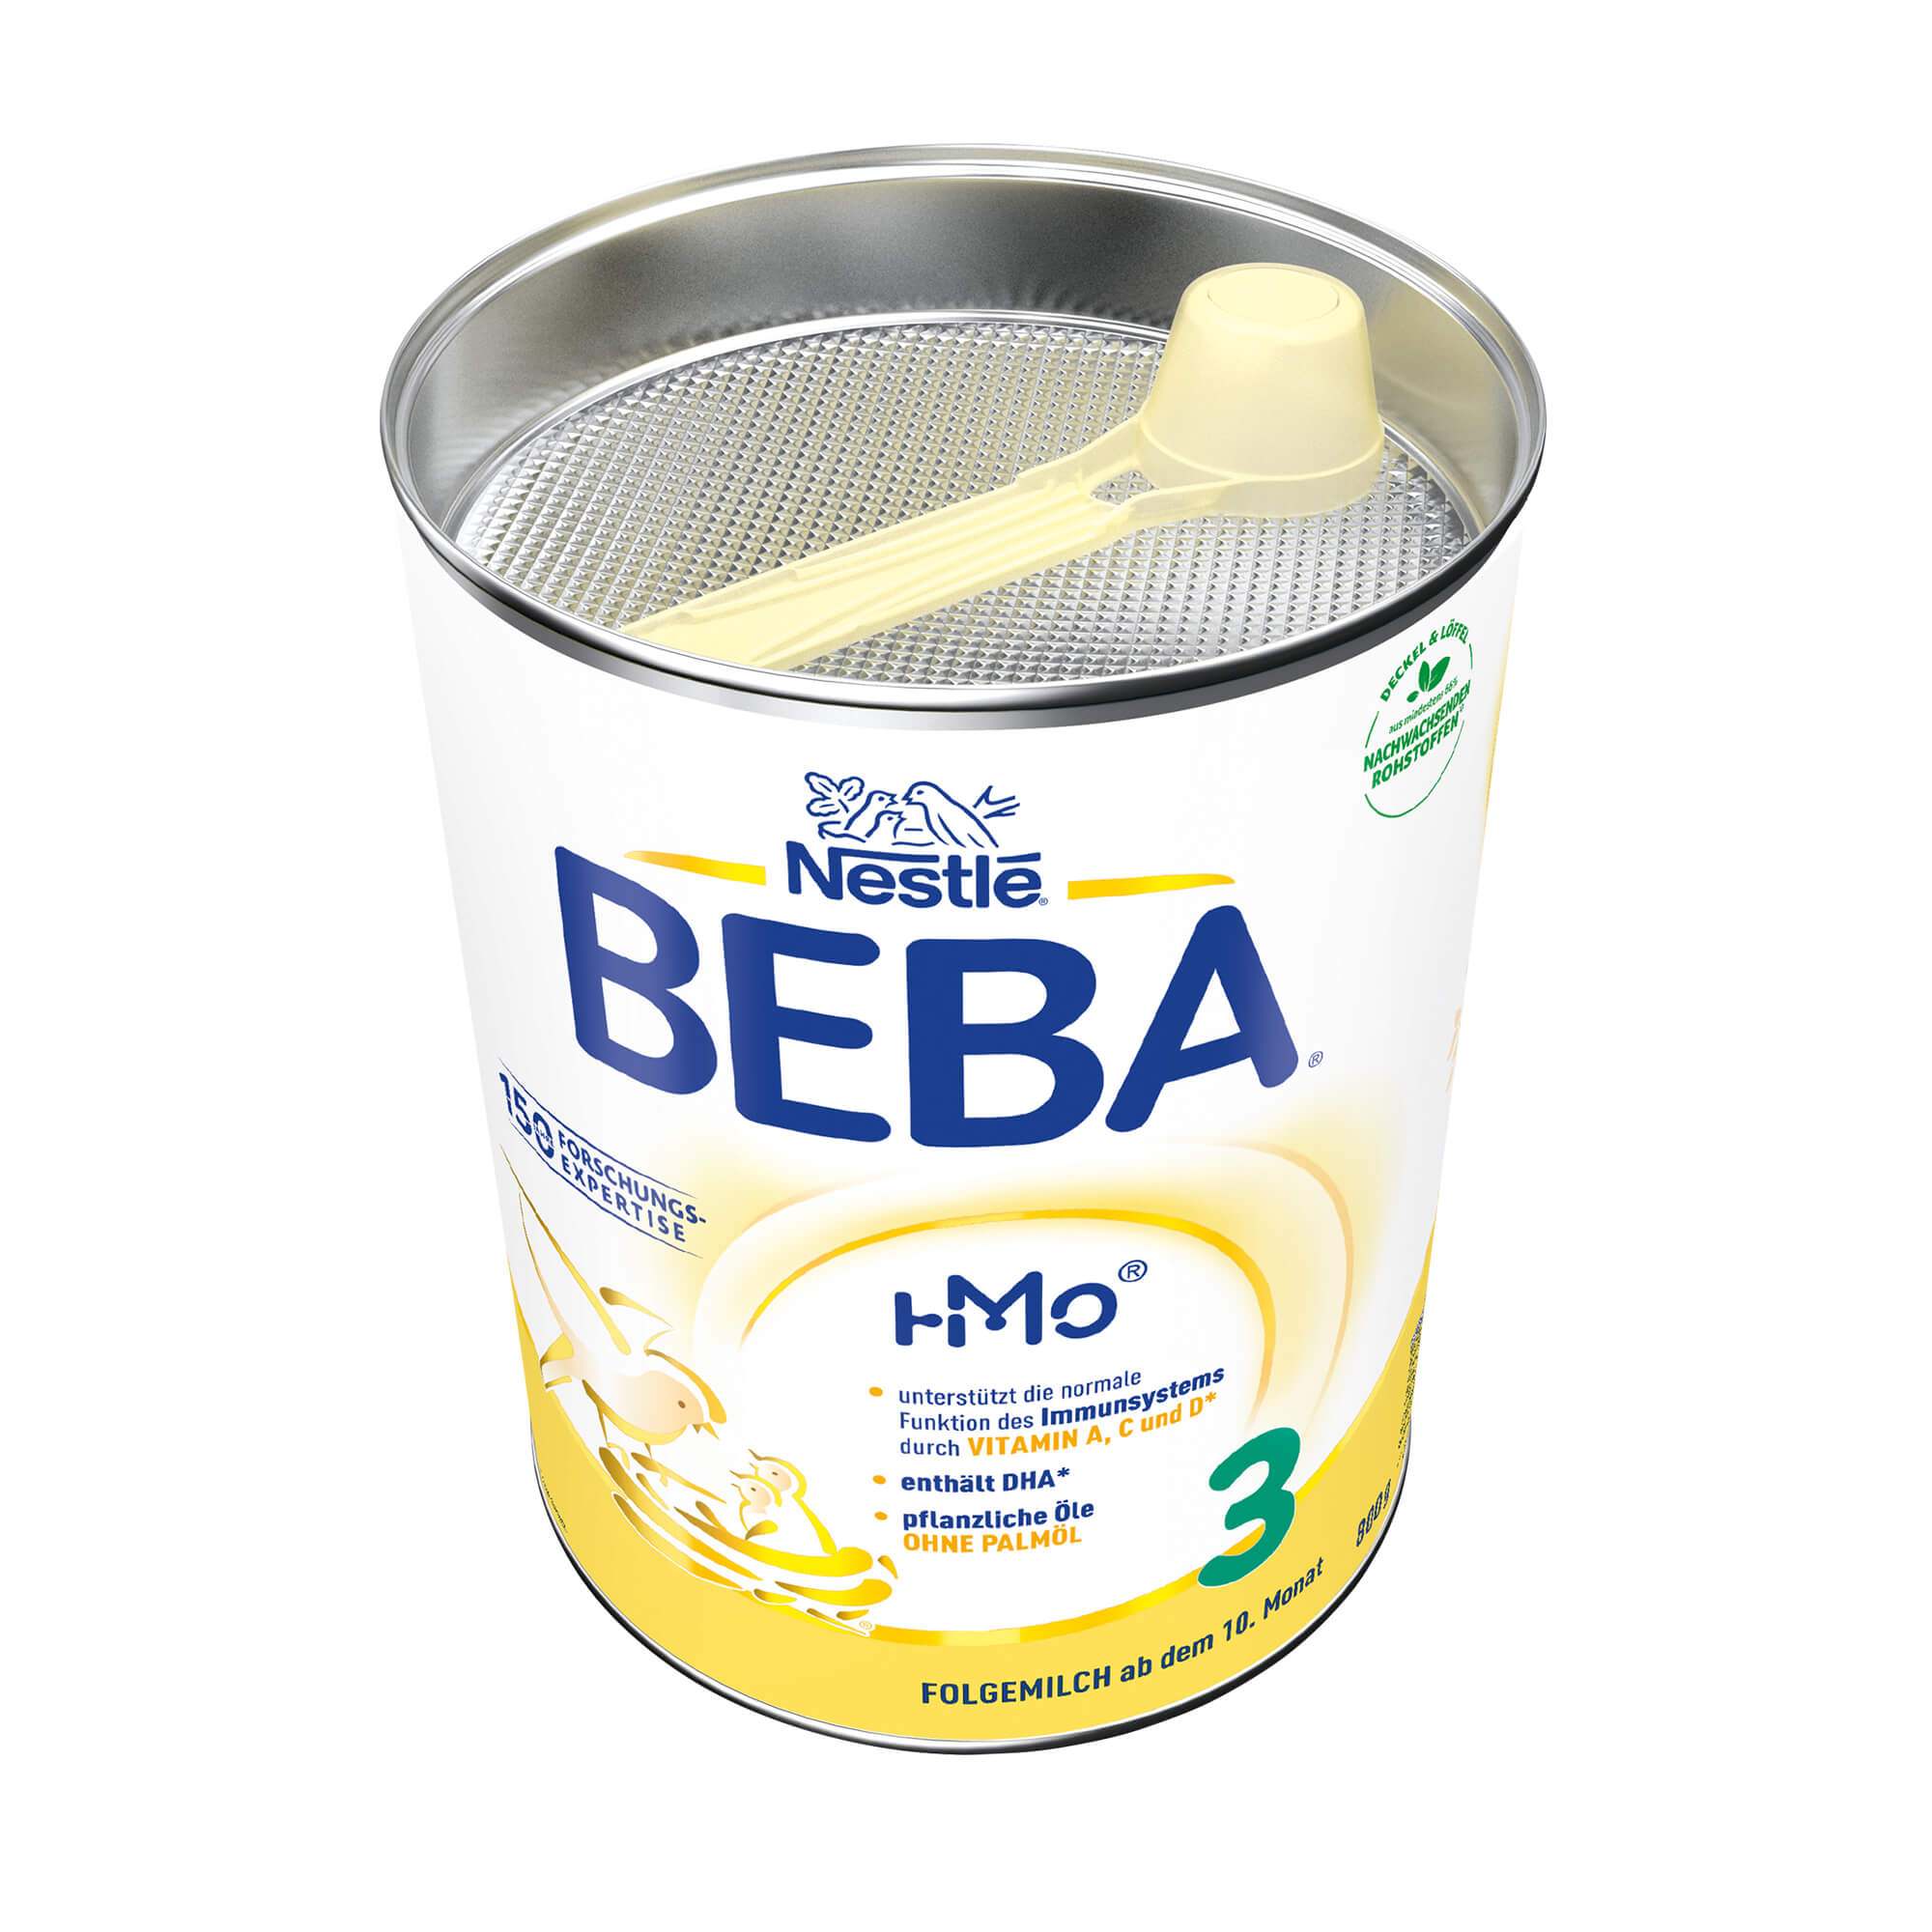 Nestlé BEBA 3 Folgemilch ab dem 10. Monat